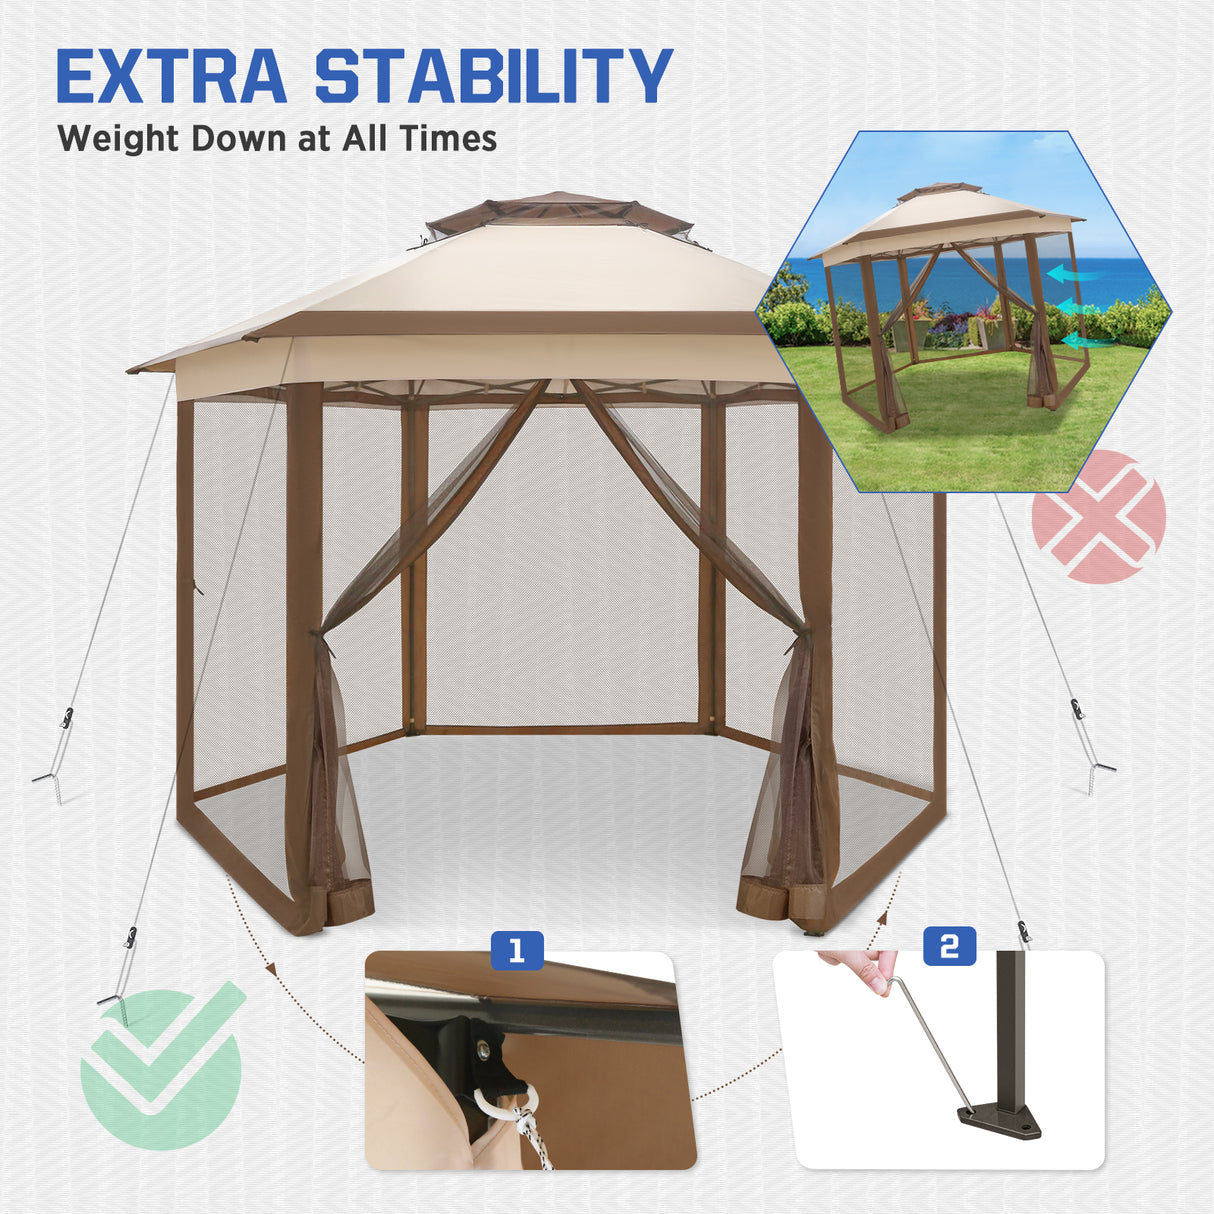 EAGLE PEAK 6-Sided Pop Up Gazebo w/Mosquito Netting, 13x13 Double-Tier Hexagonal Outdoor Canopy Tent for Patio, Garden, Party, Backyard, Beige